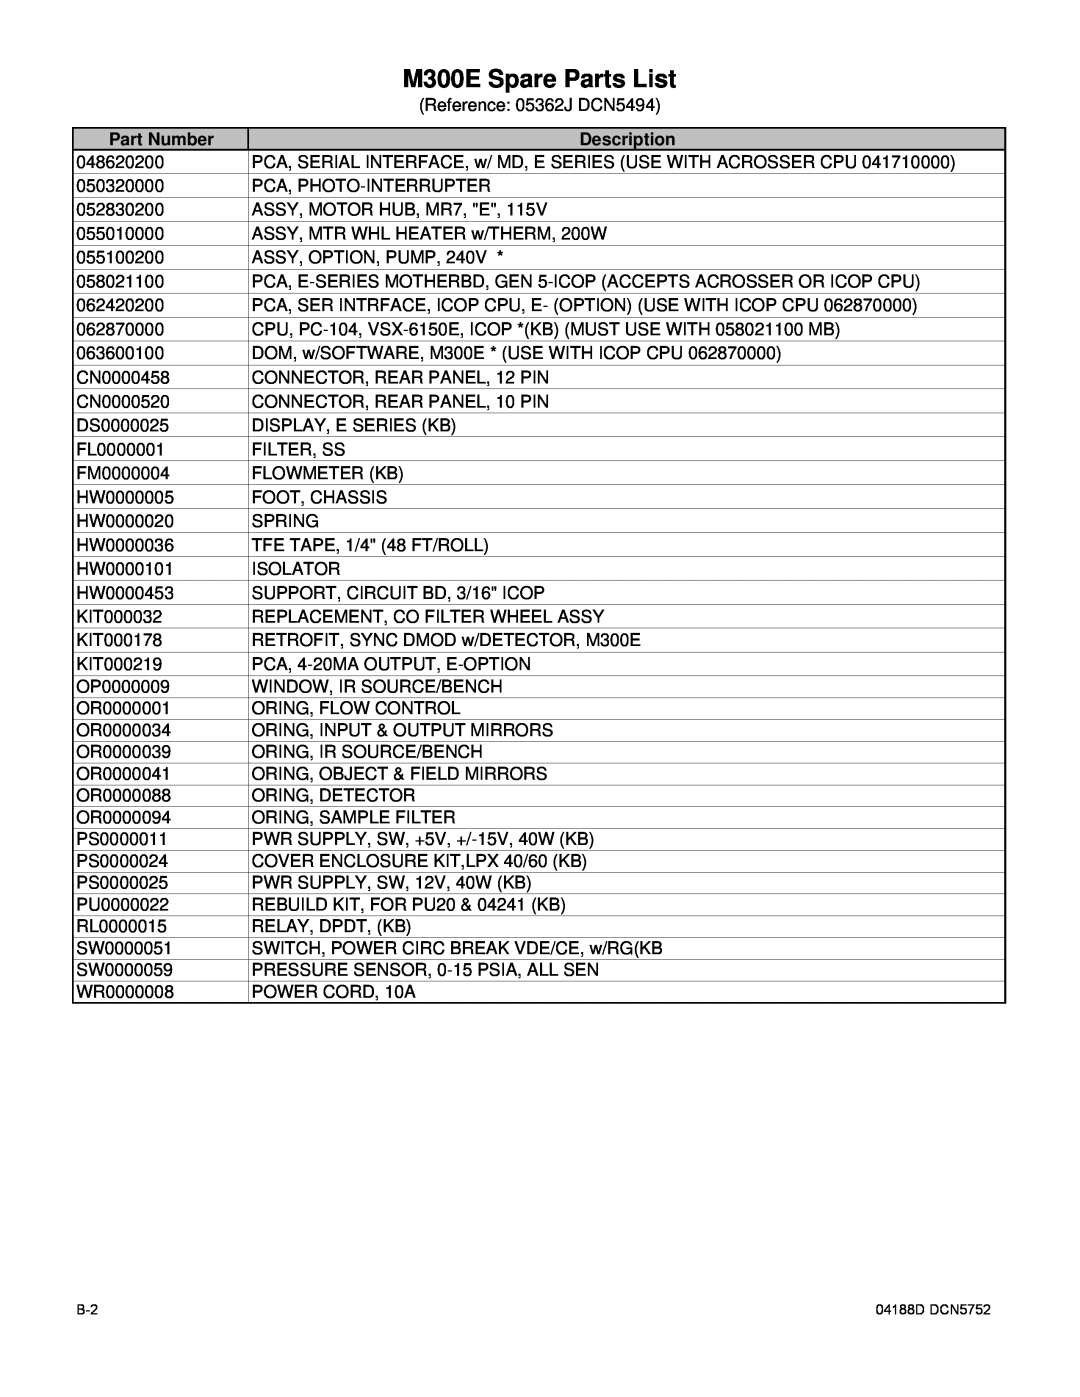 Teledyne M300EM operation manual M300E Spare Parts List, Reference: 05362J DCN5494, Part Number, Description 